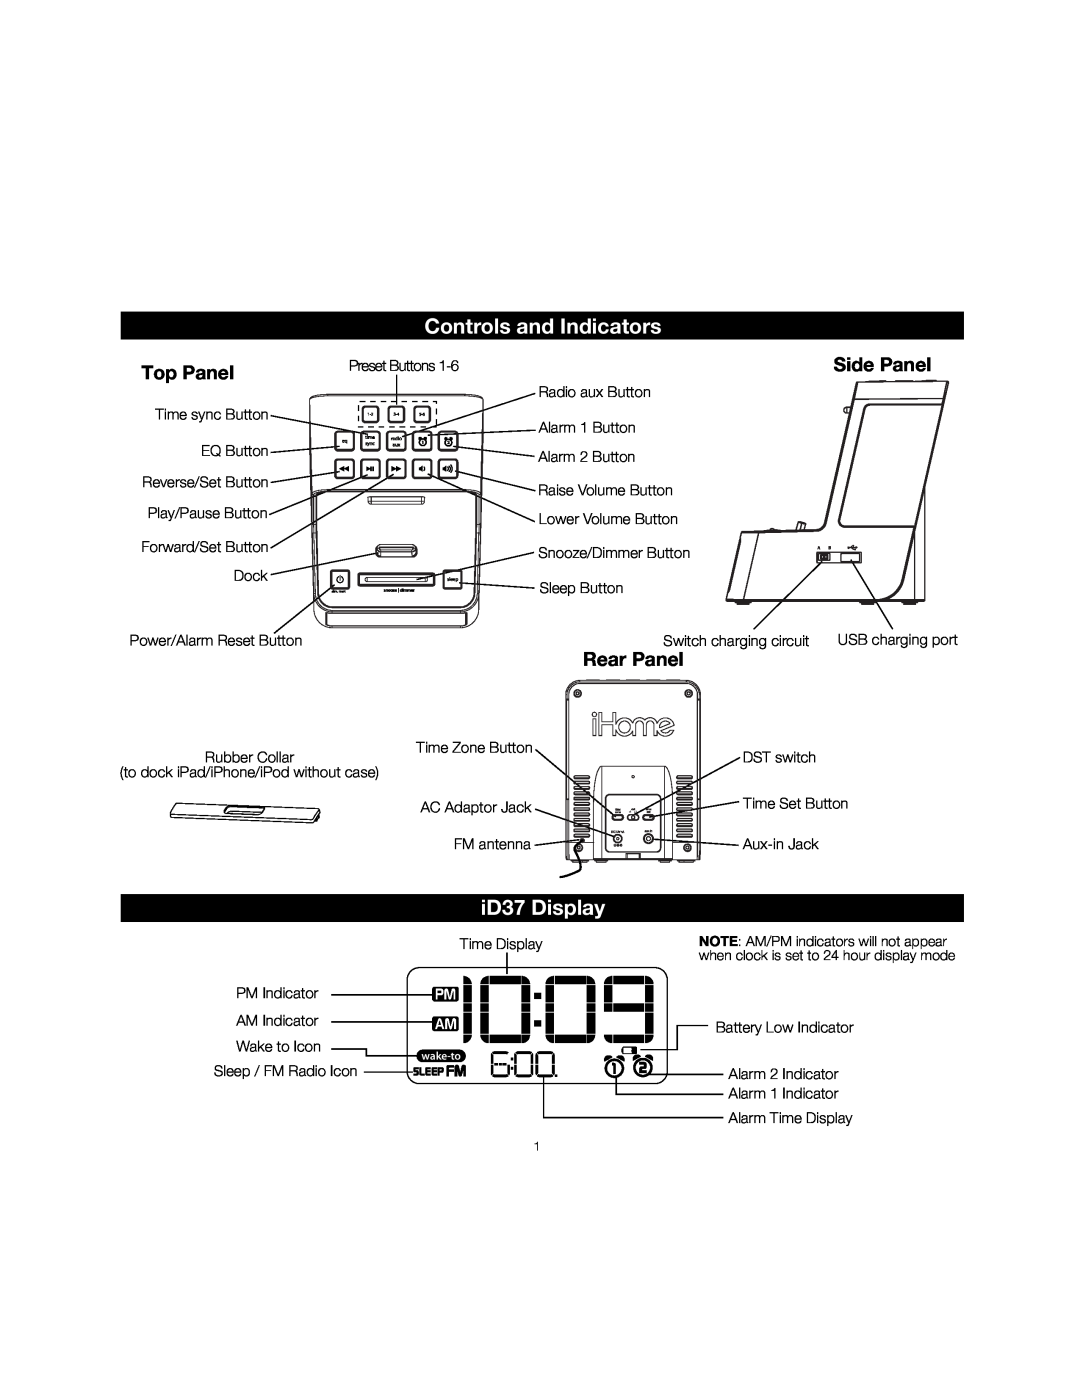 iHome ID37 manual Controls and Indicators, iD37 Display, Side Panel, Rear Panel, Top Panel 